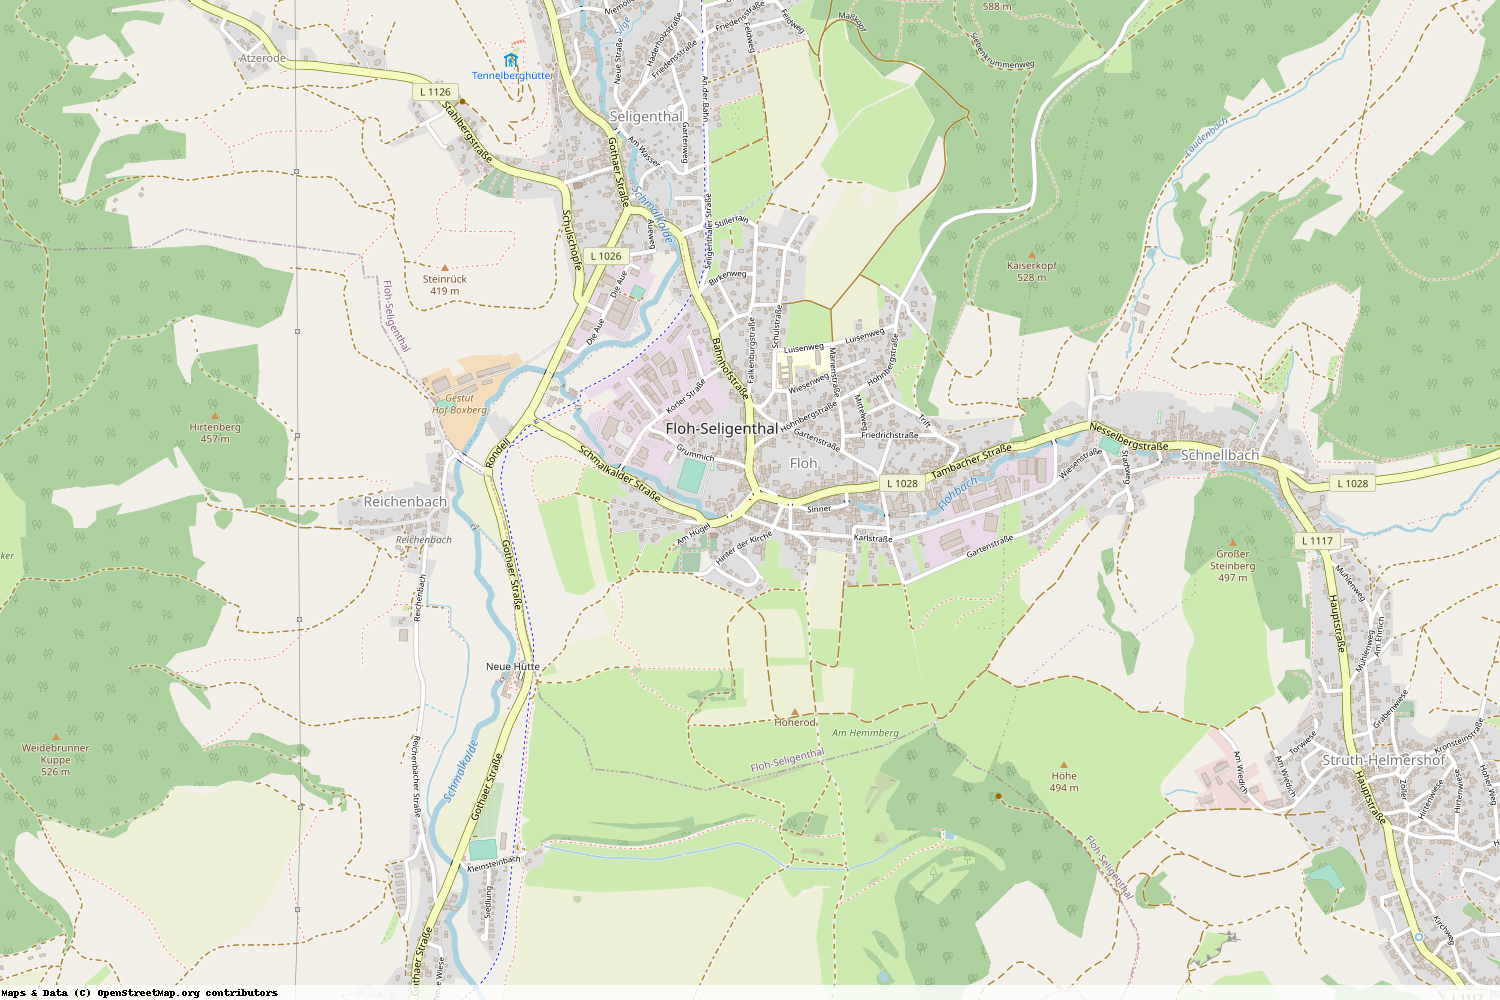 Ist gerade Stromausfall in Thüringen - Schmalkalden-Meiningen - Floh-Seligenthal?